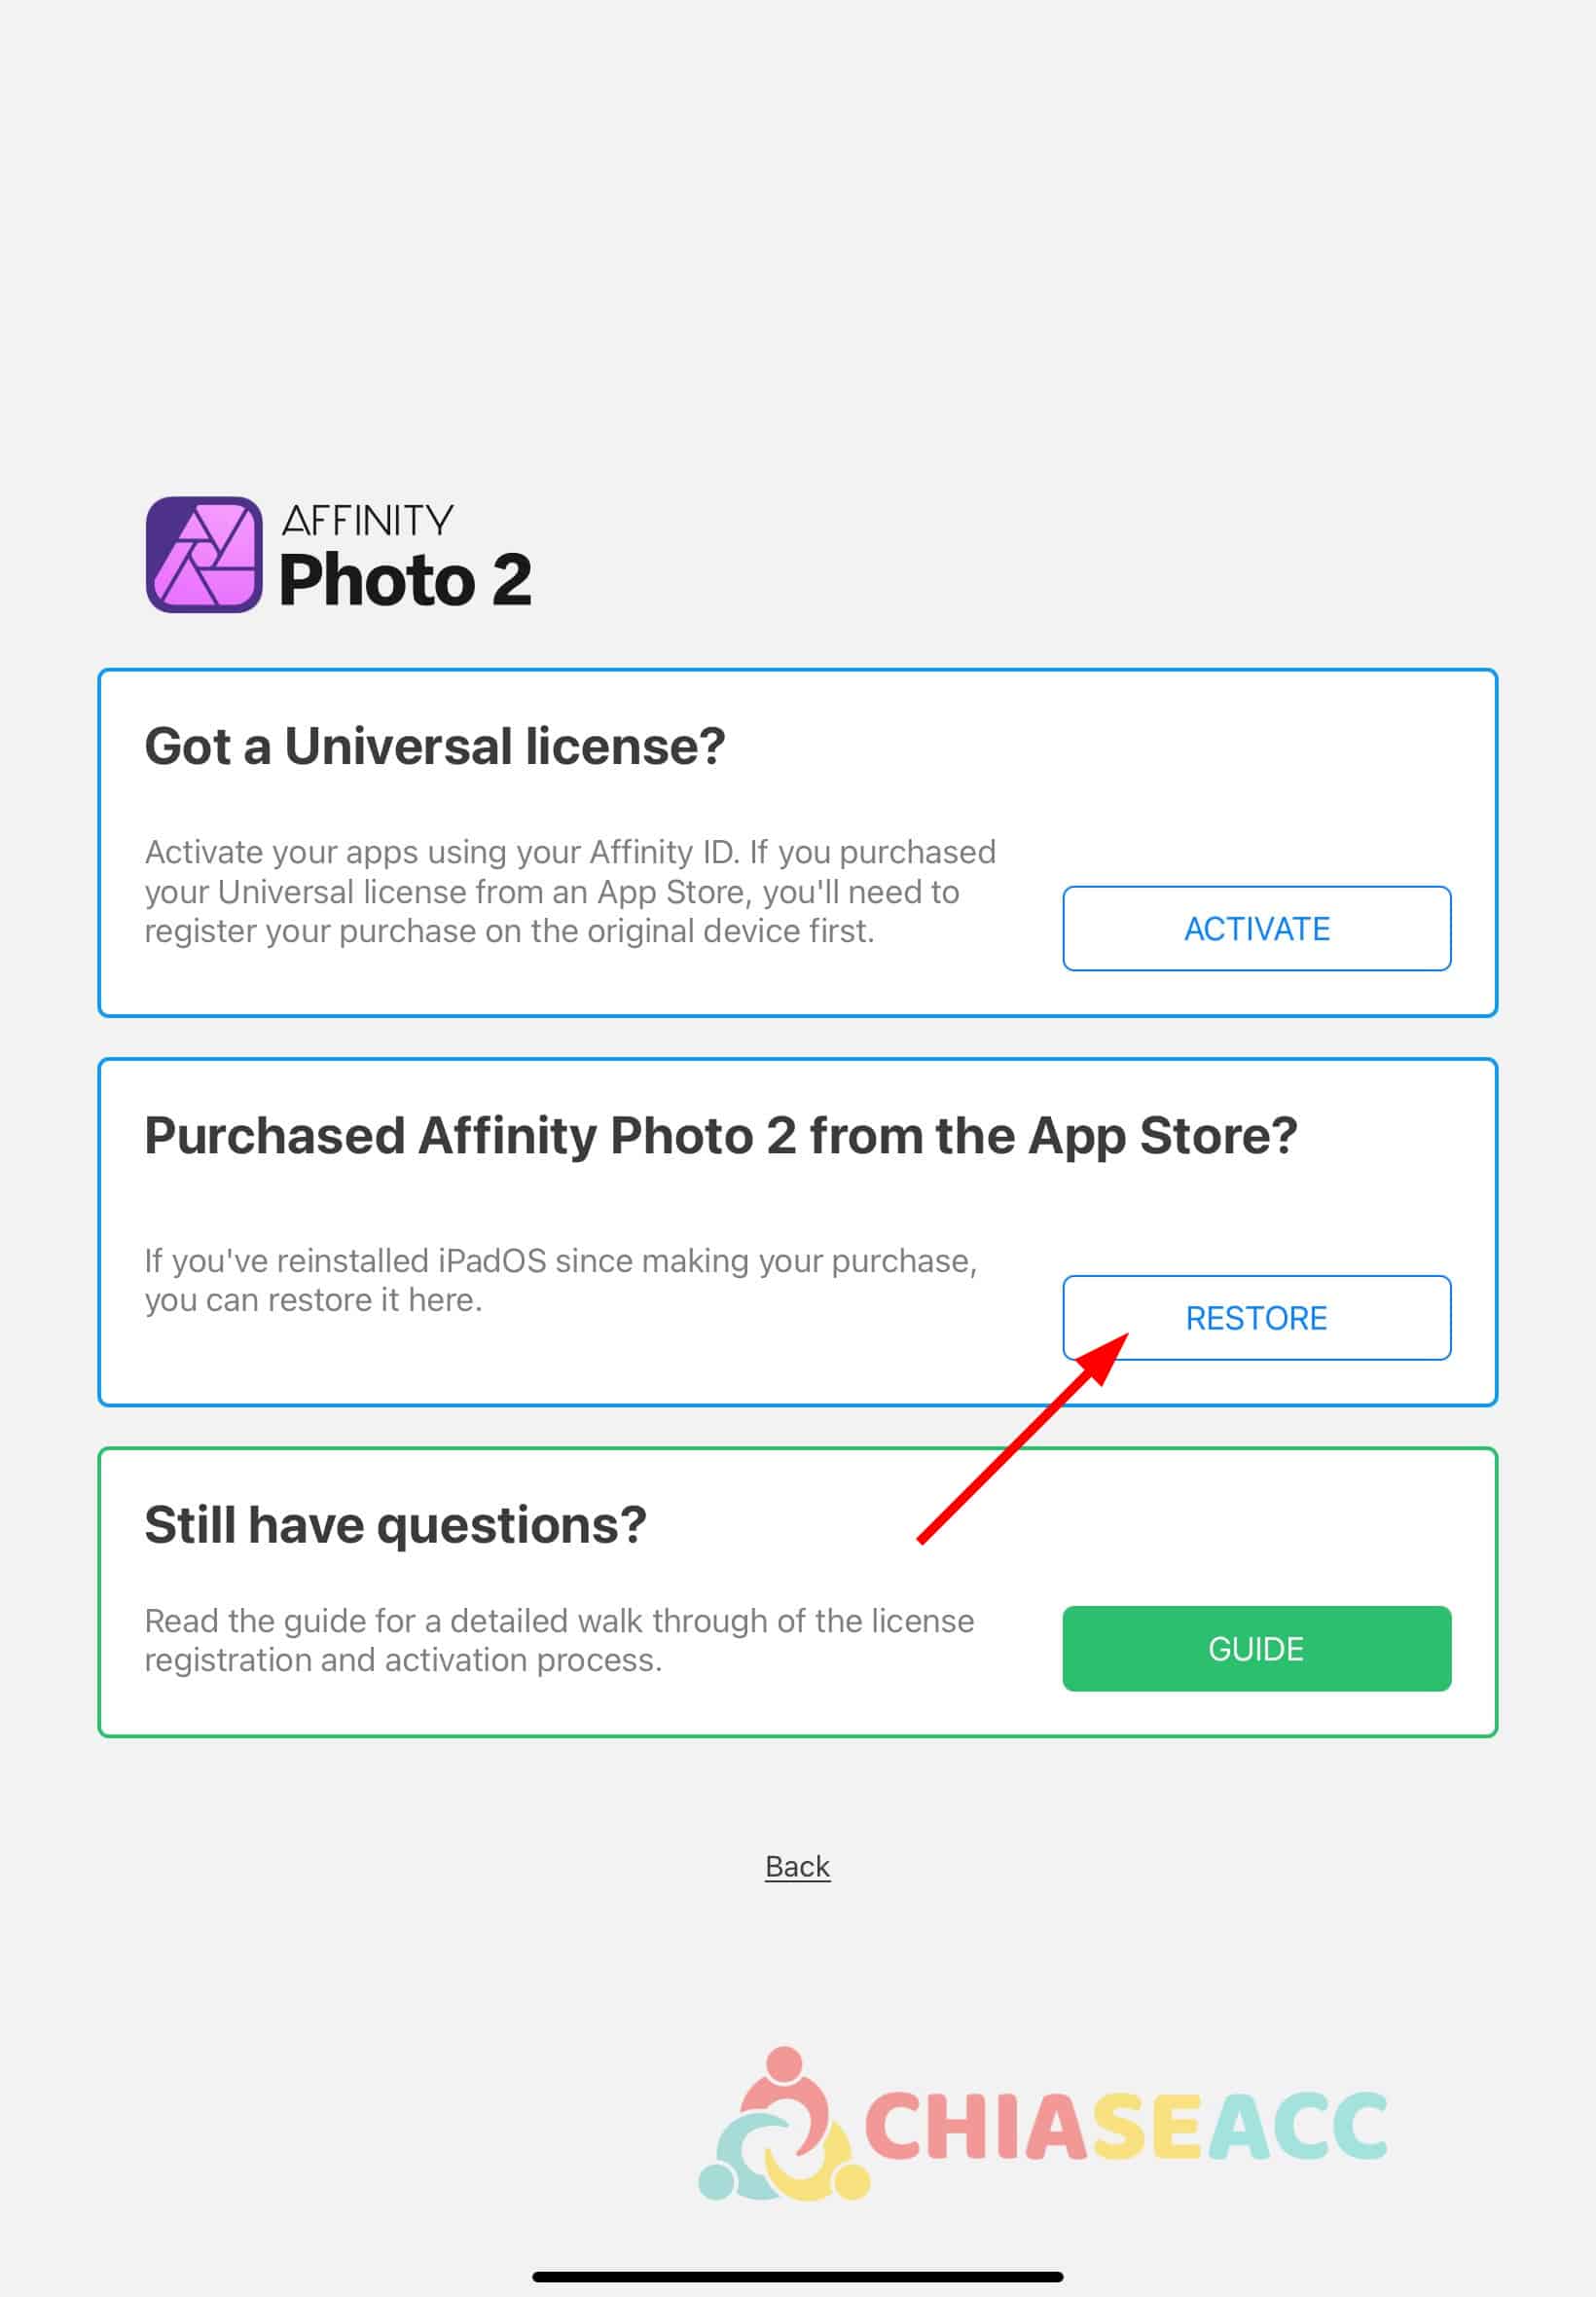 Affinity Photo 2 for iPad, MacOS, Window 2